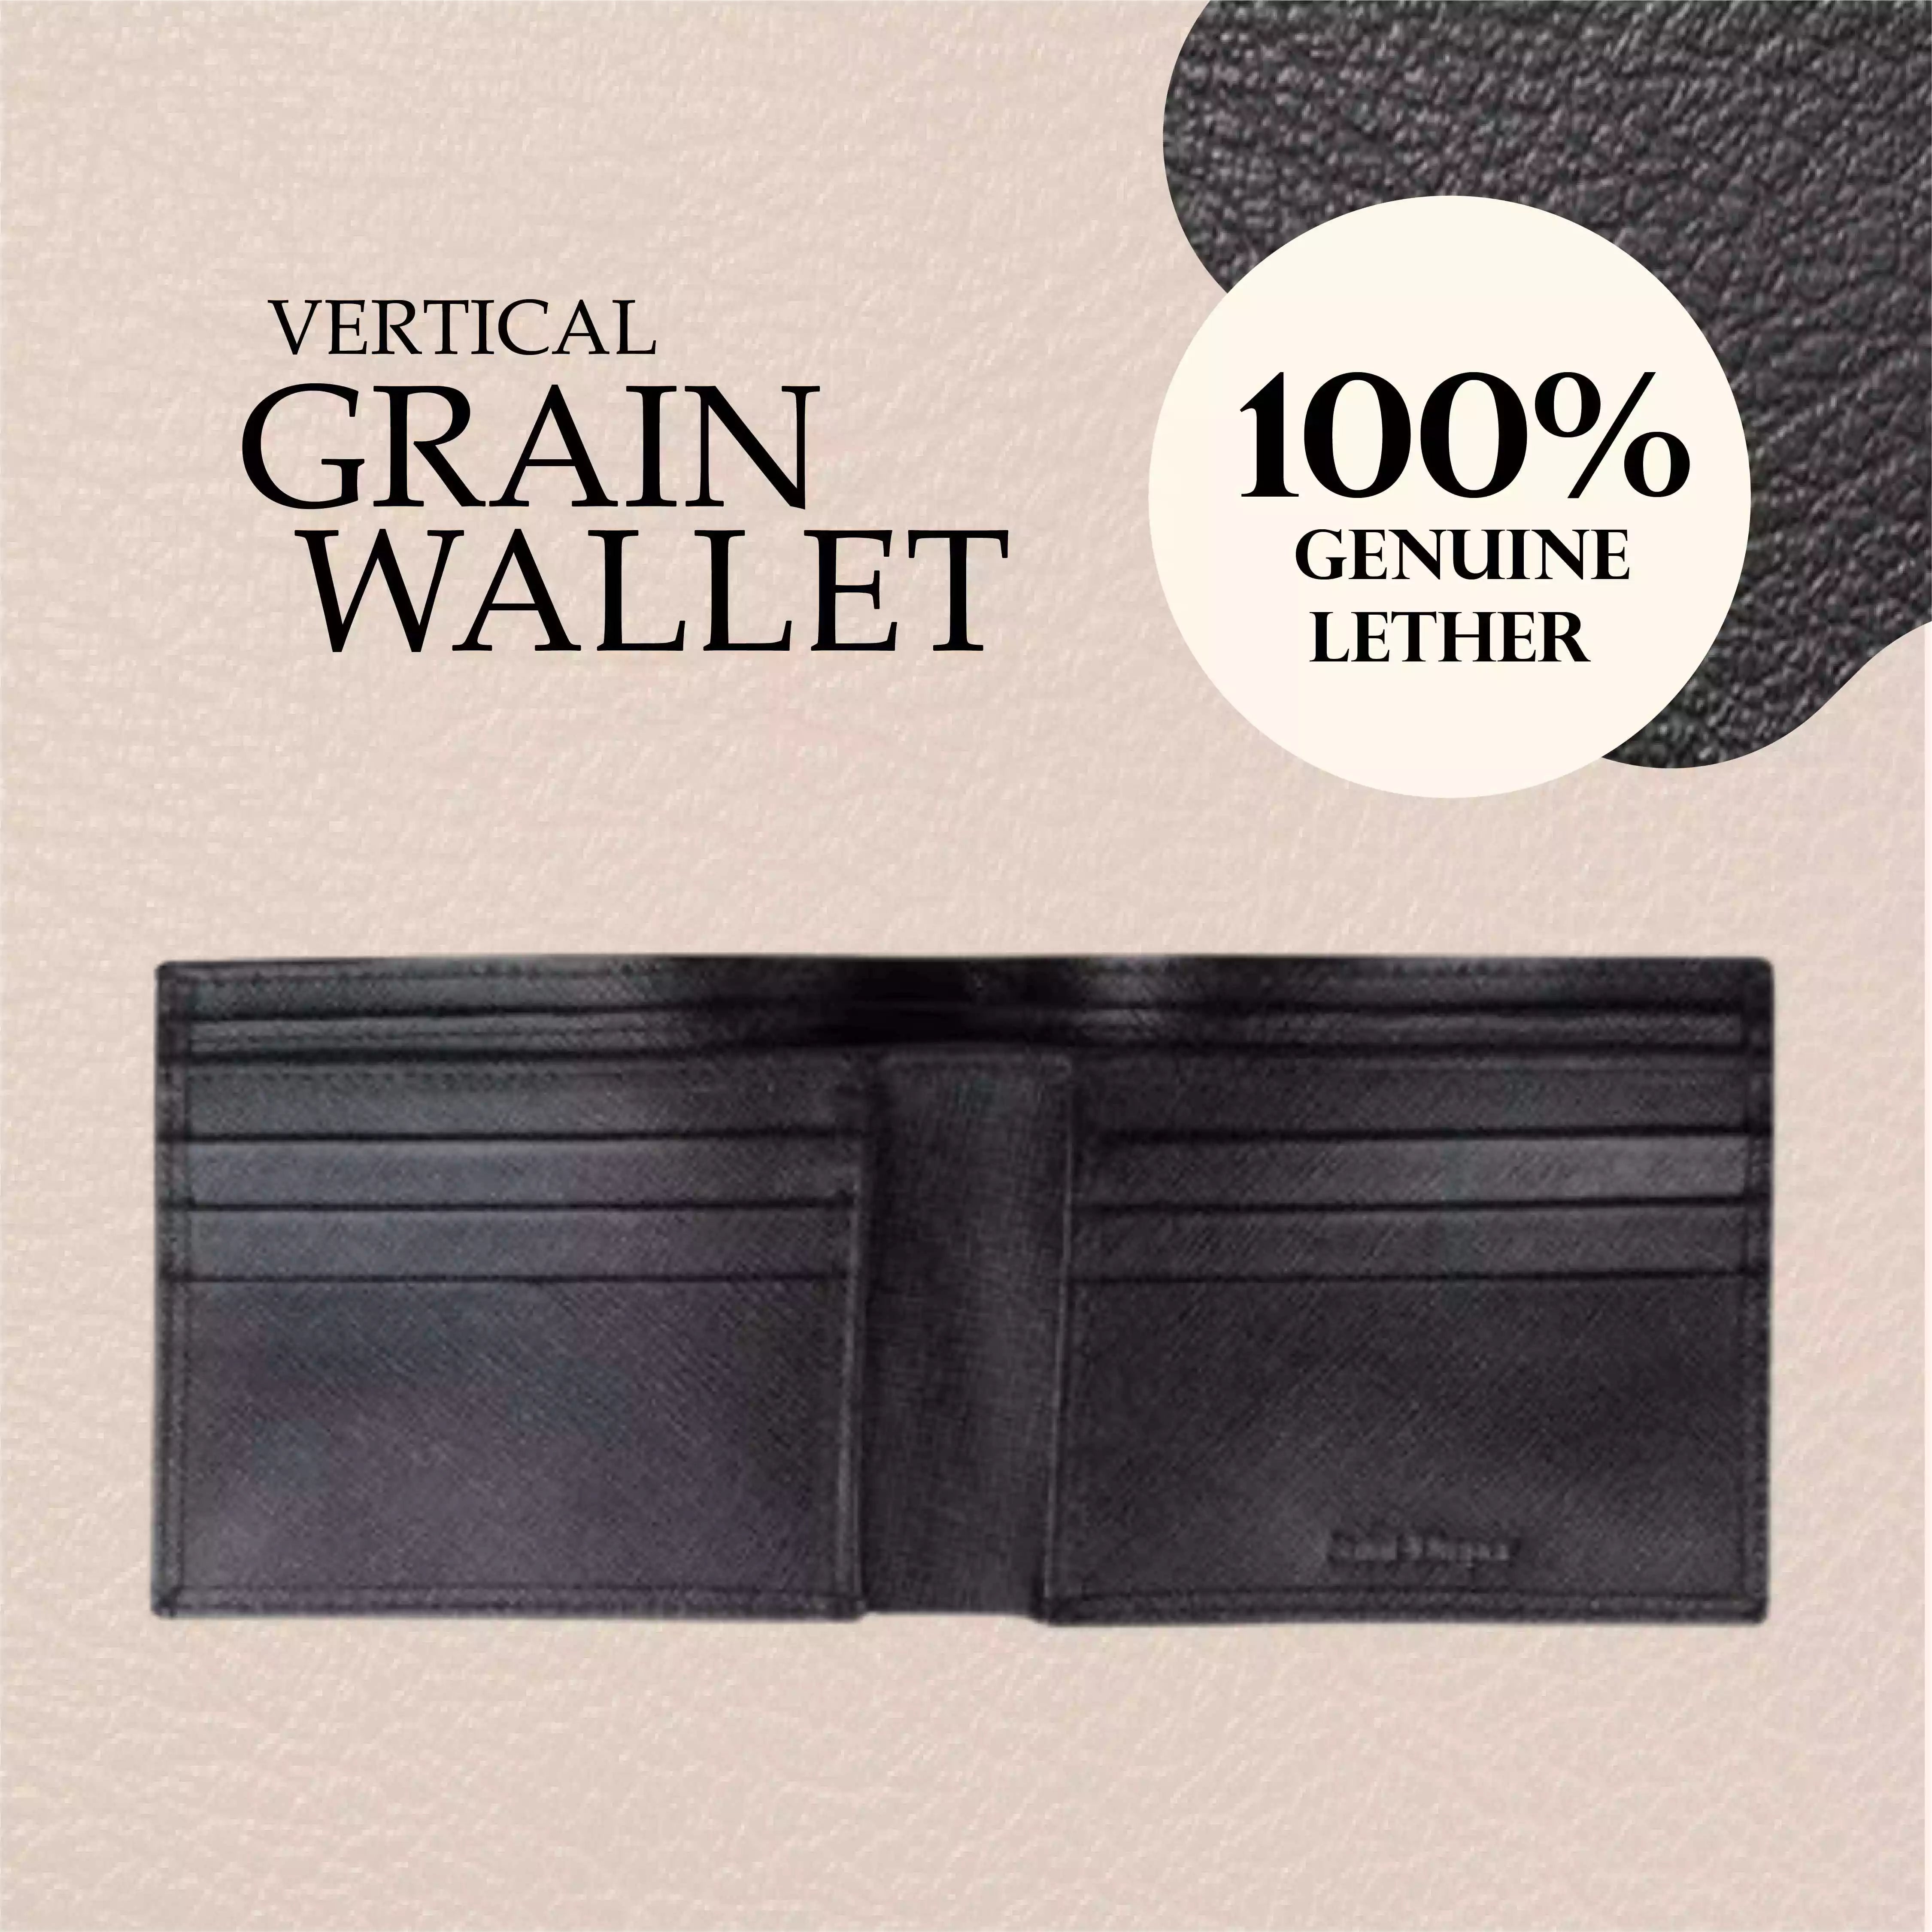 Full Grain Leather Wallet